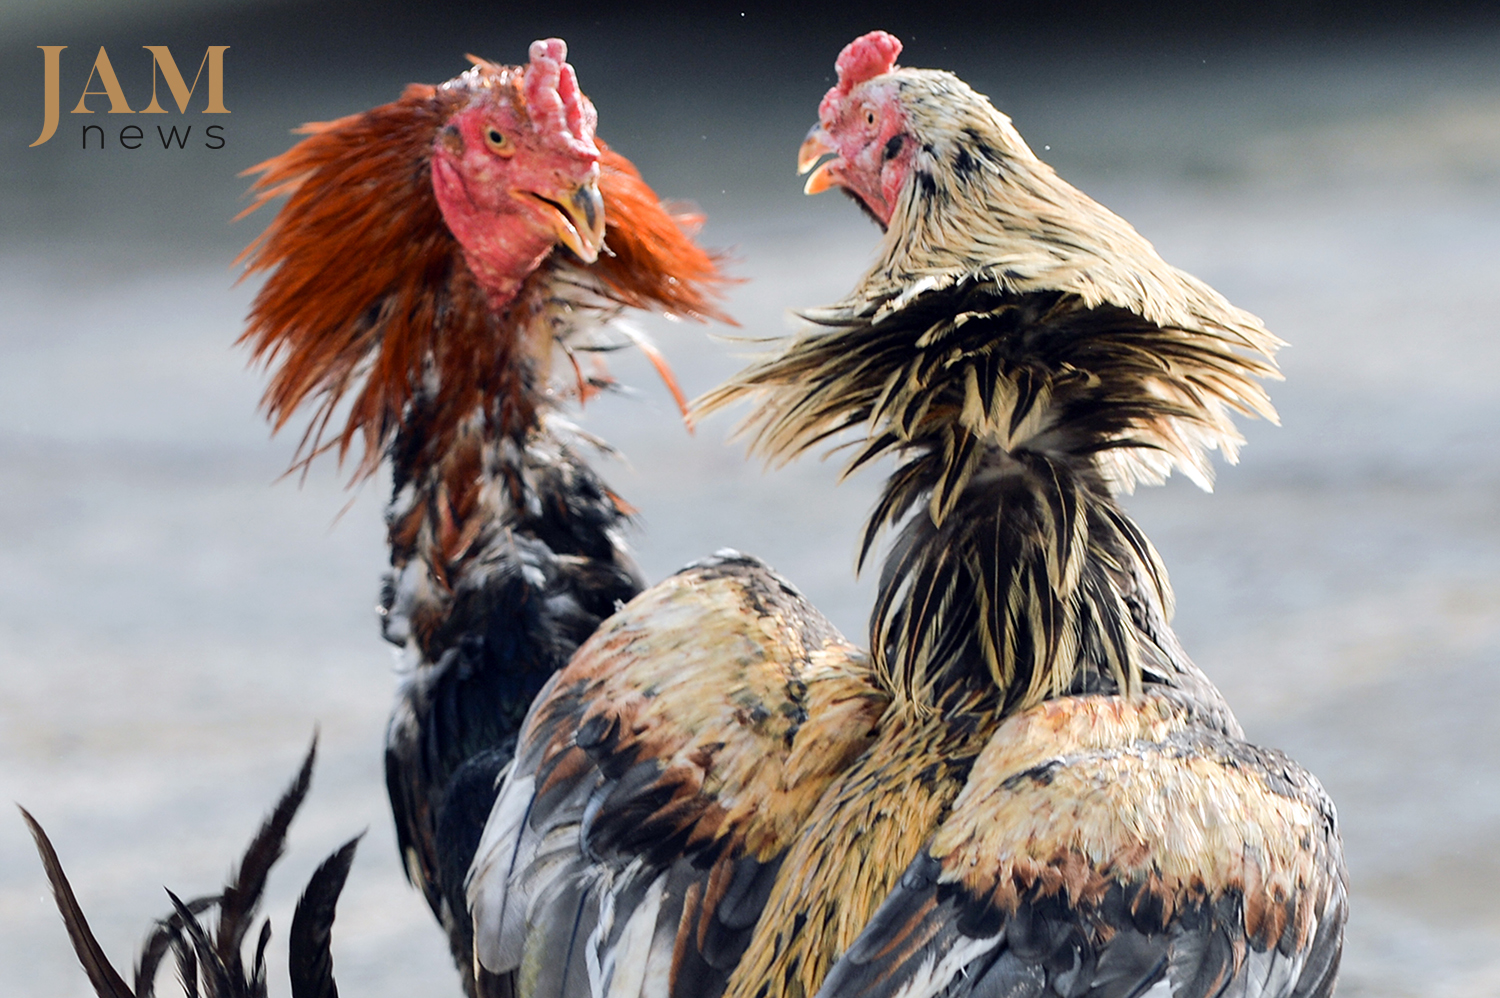 Photo JAMnews. Cockfighting in Azerbaijan